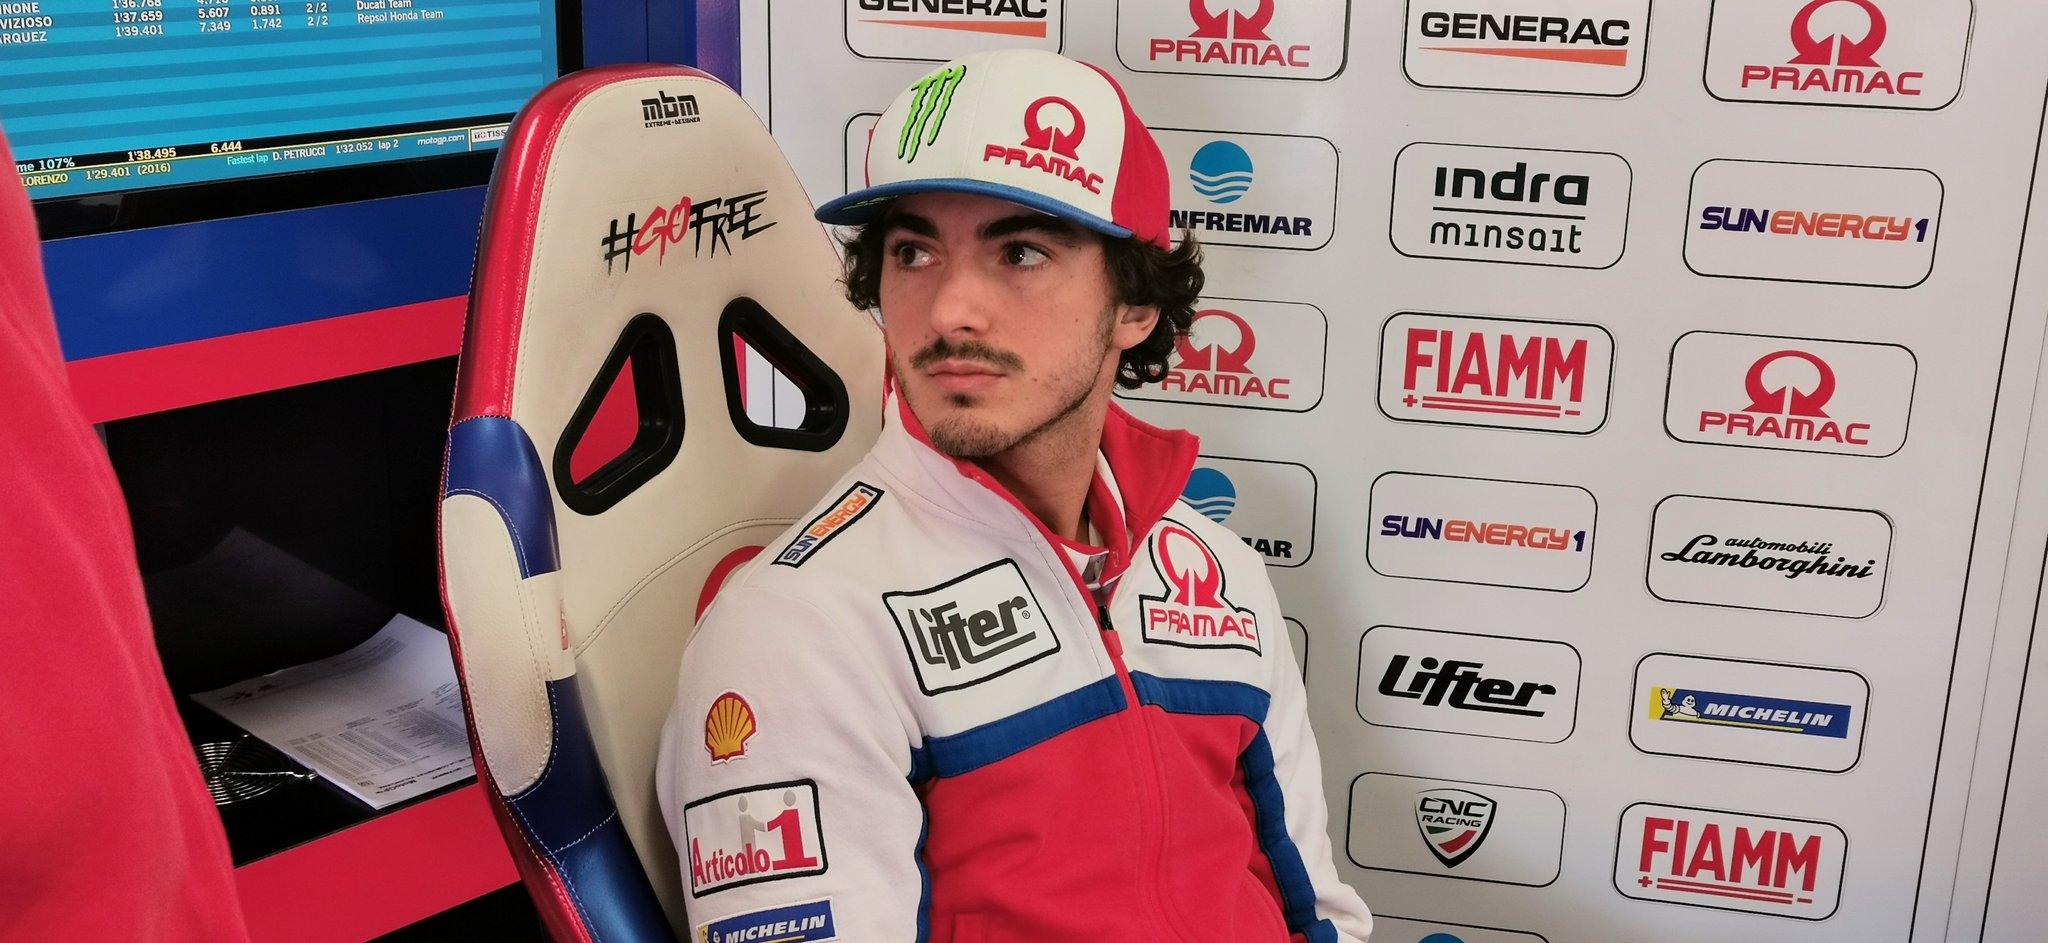 MotoGP Ceko 2020: Pramac Racing Konfirmasi Francesco Bagnaia Absen di Brno